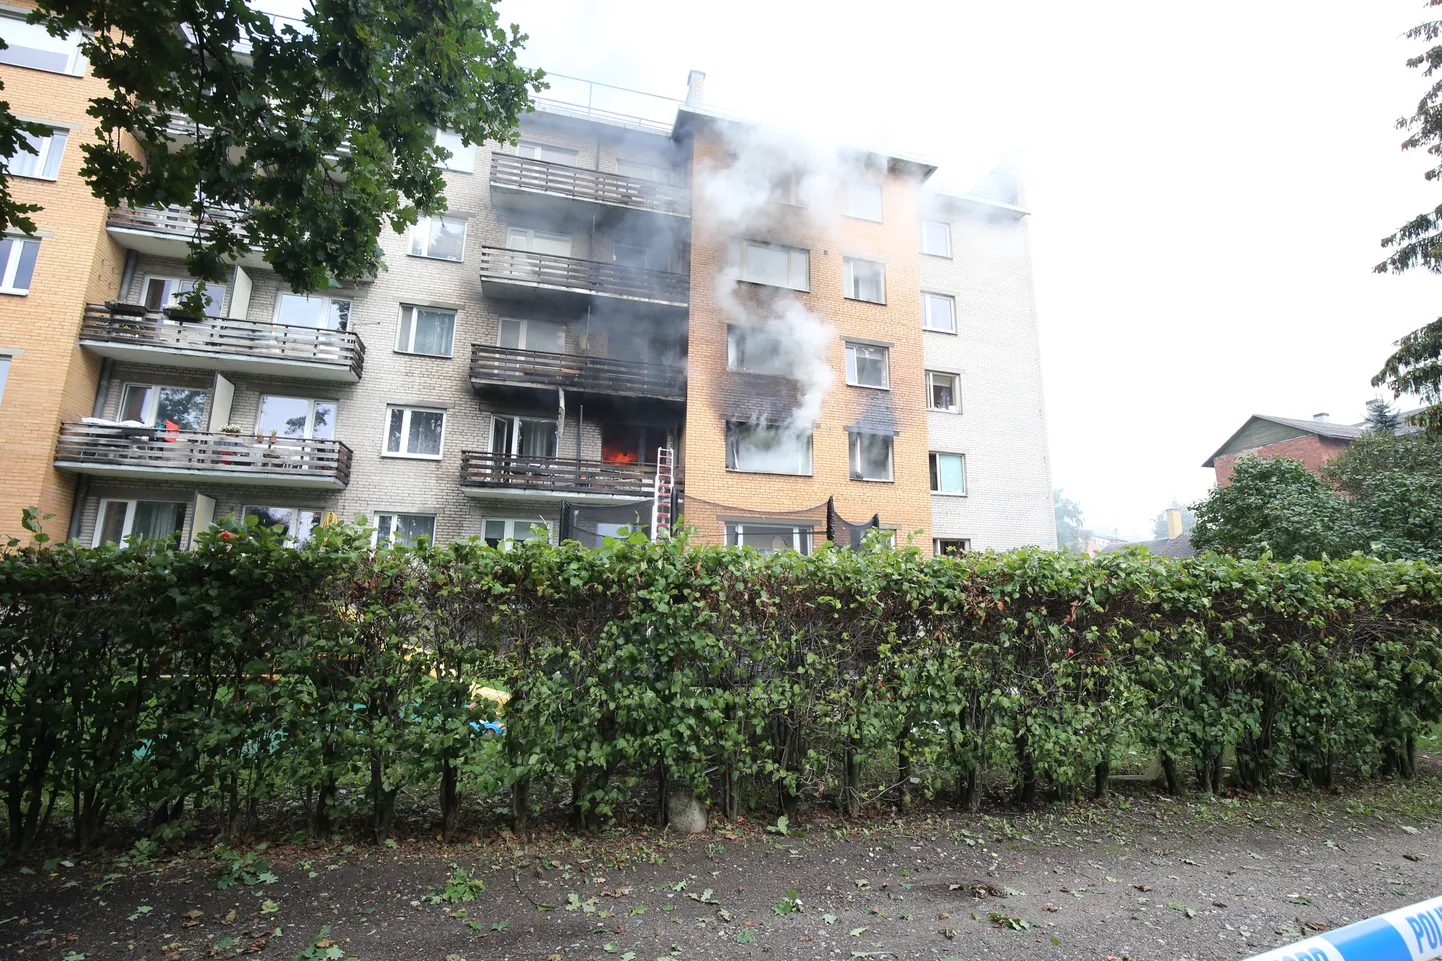 Взрыв и возгорание в многоквартирном доме в Тарту.